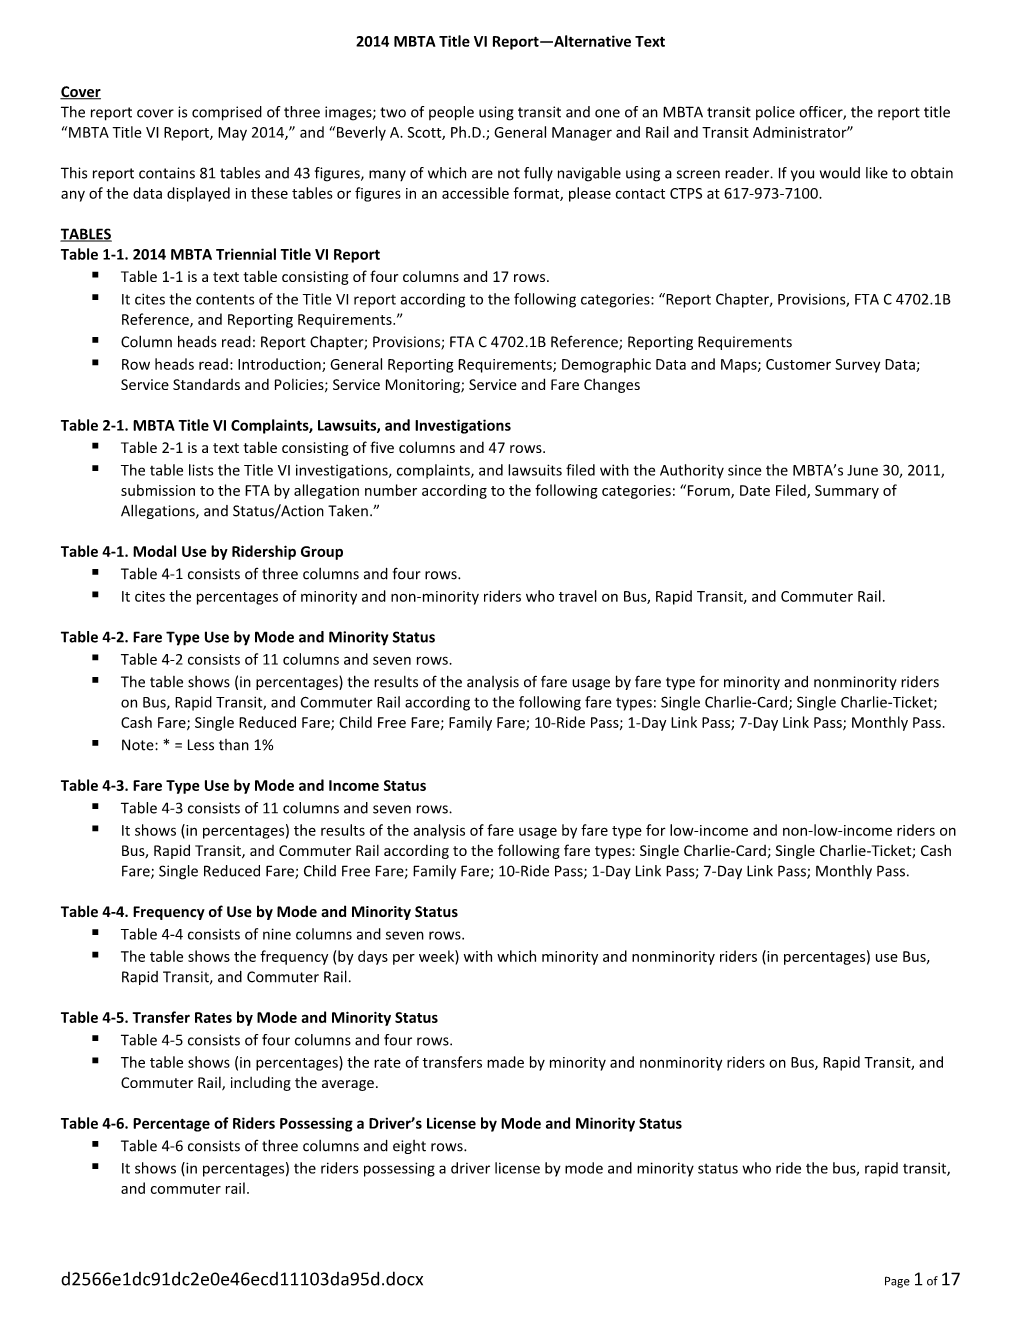 2014 MBTA Title VI Report Alternative Text